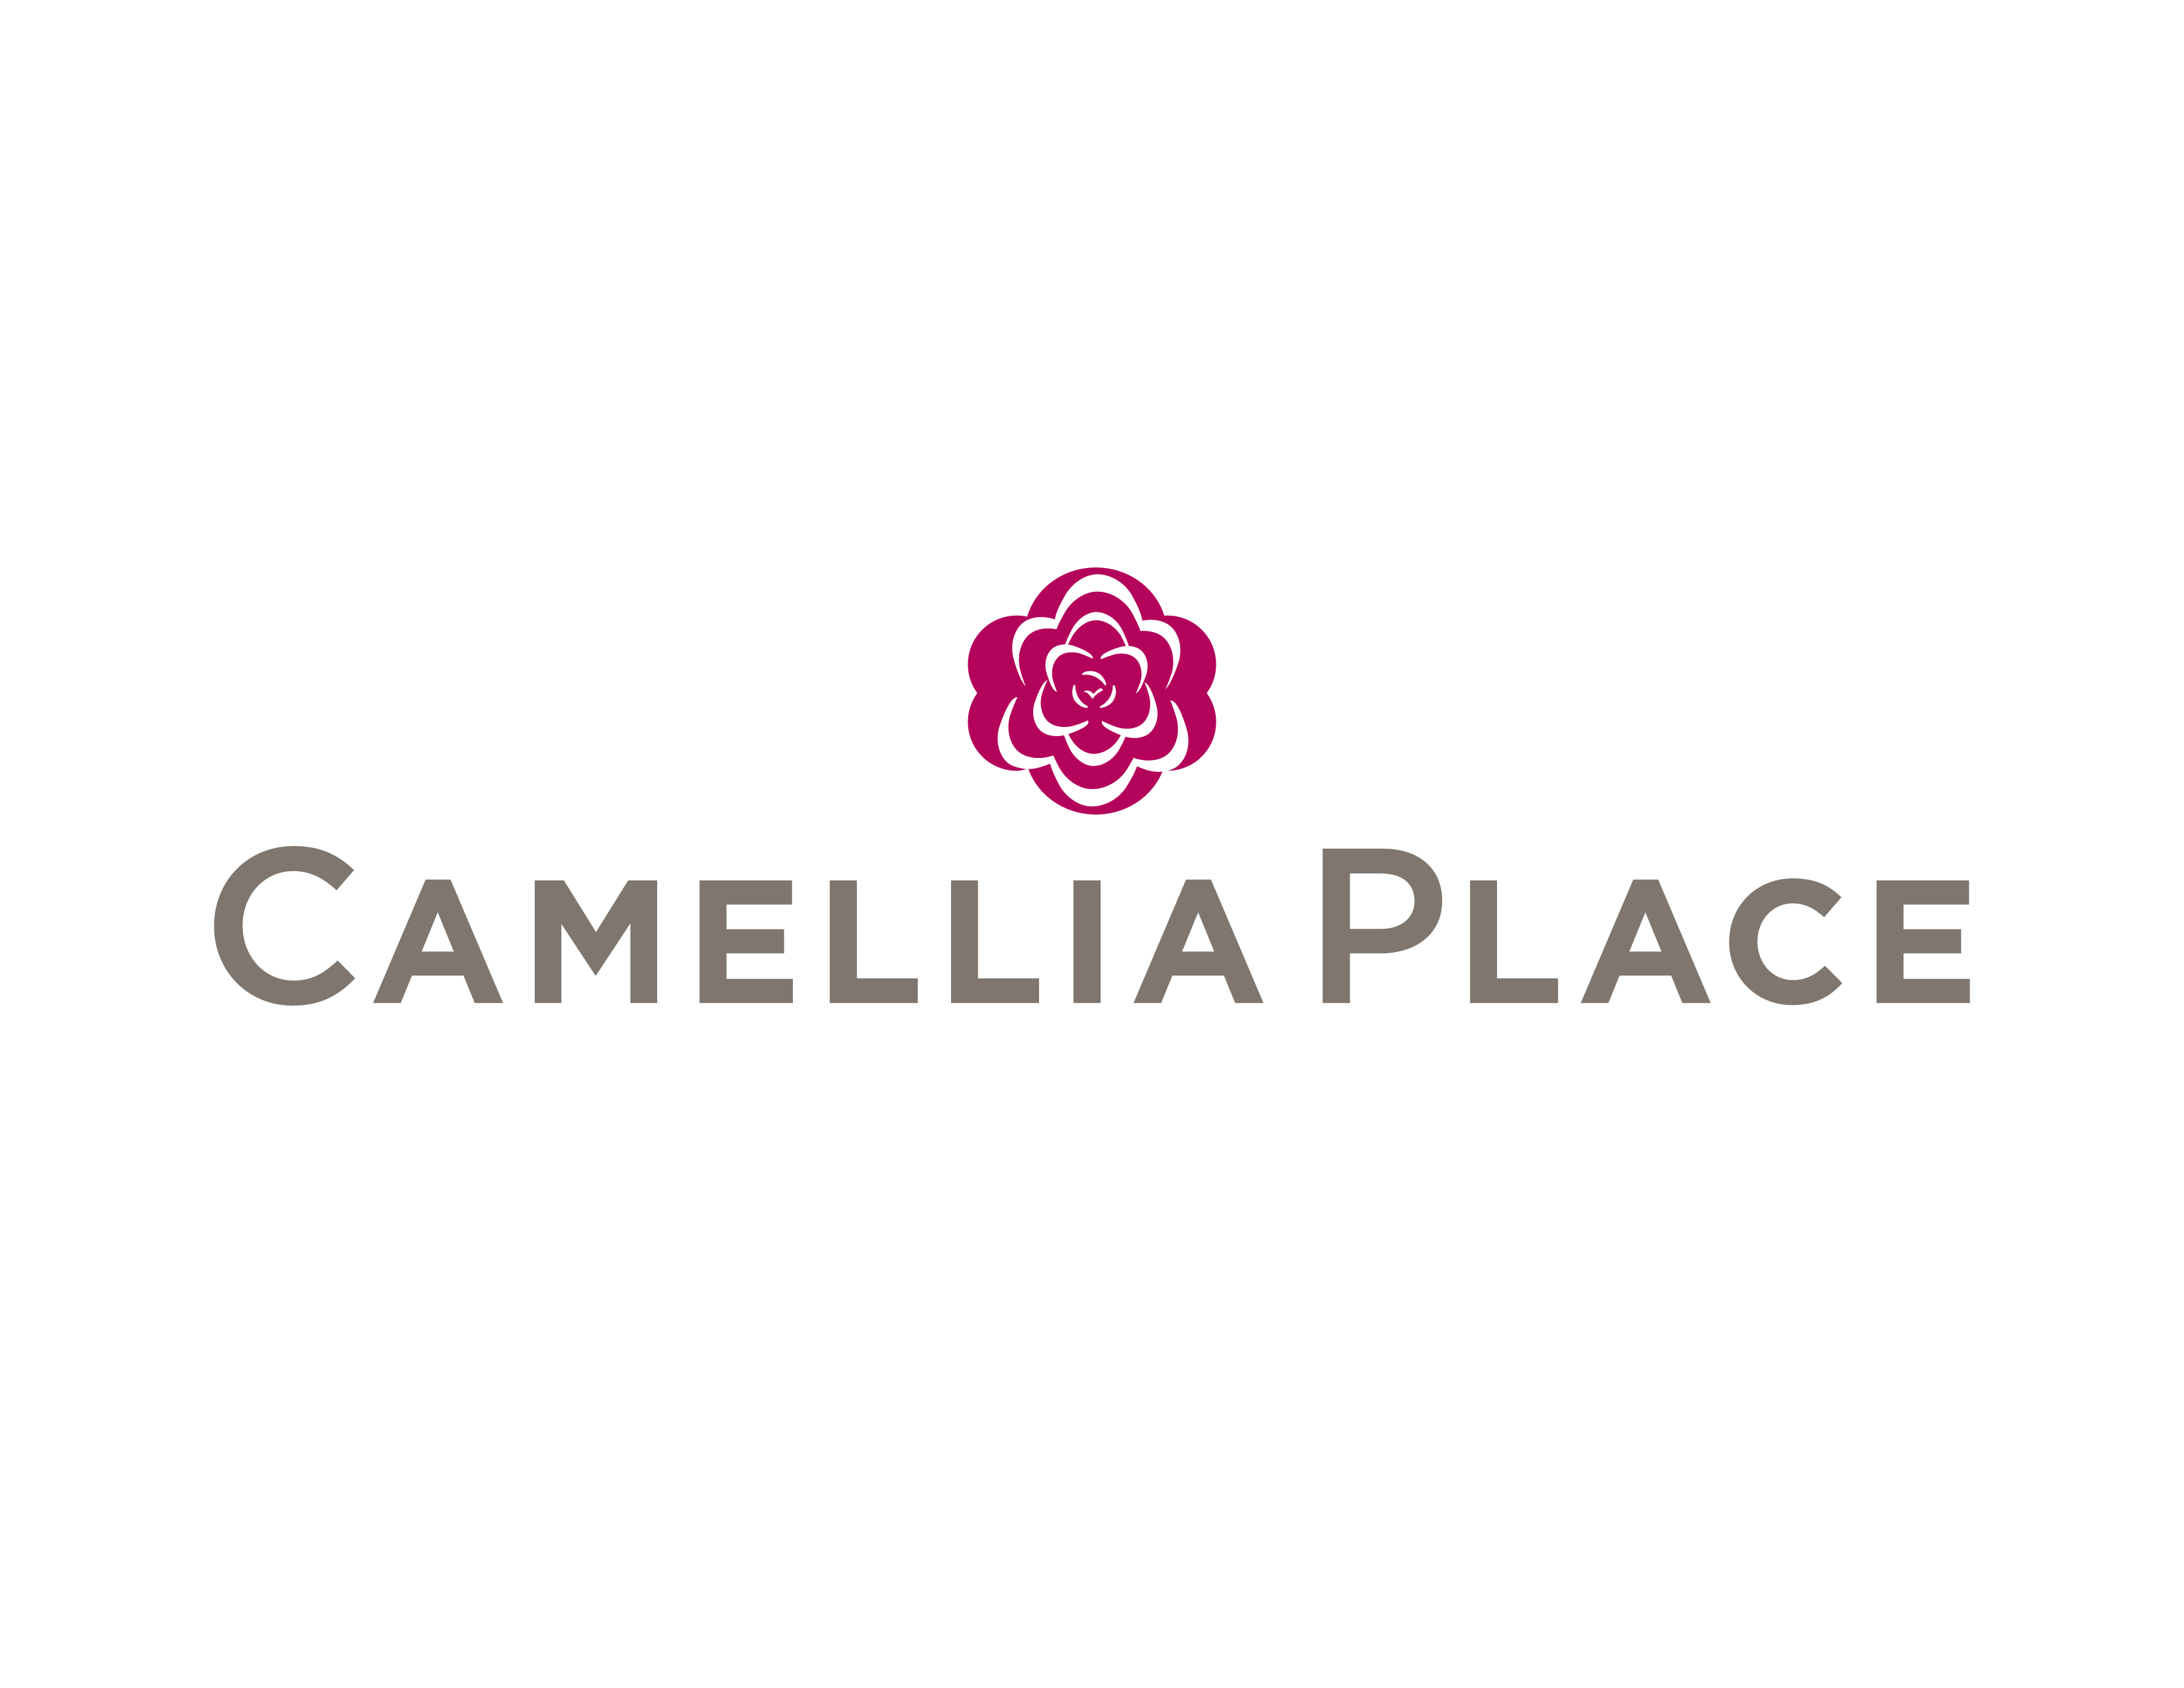 5. Camellia Place (Oro)